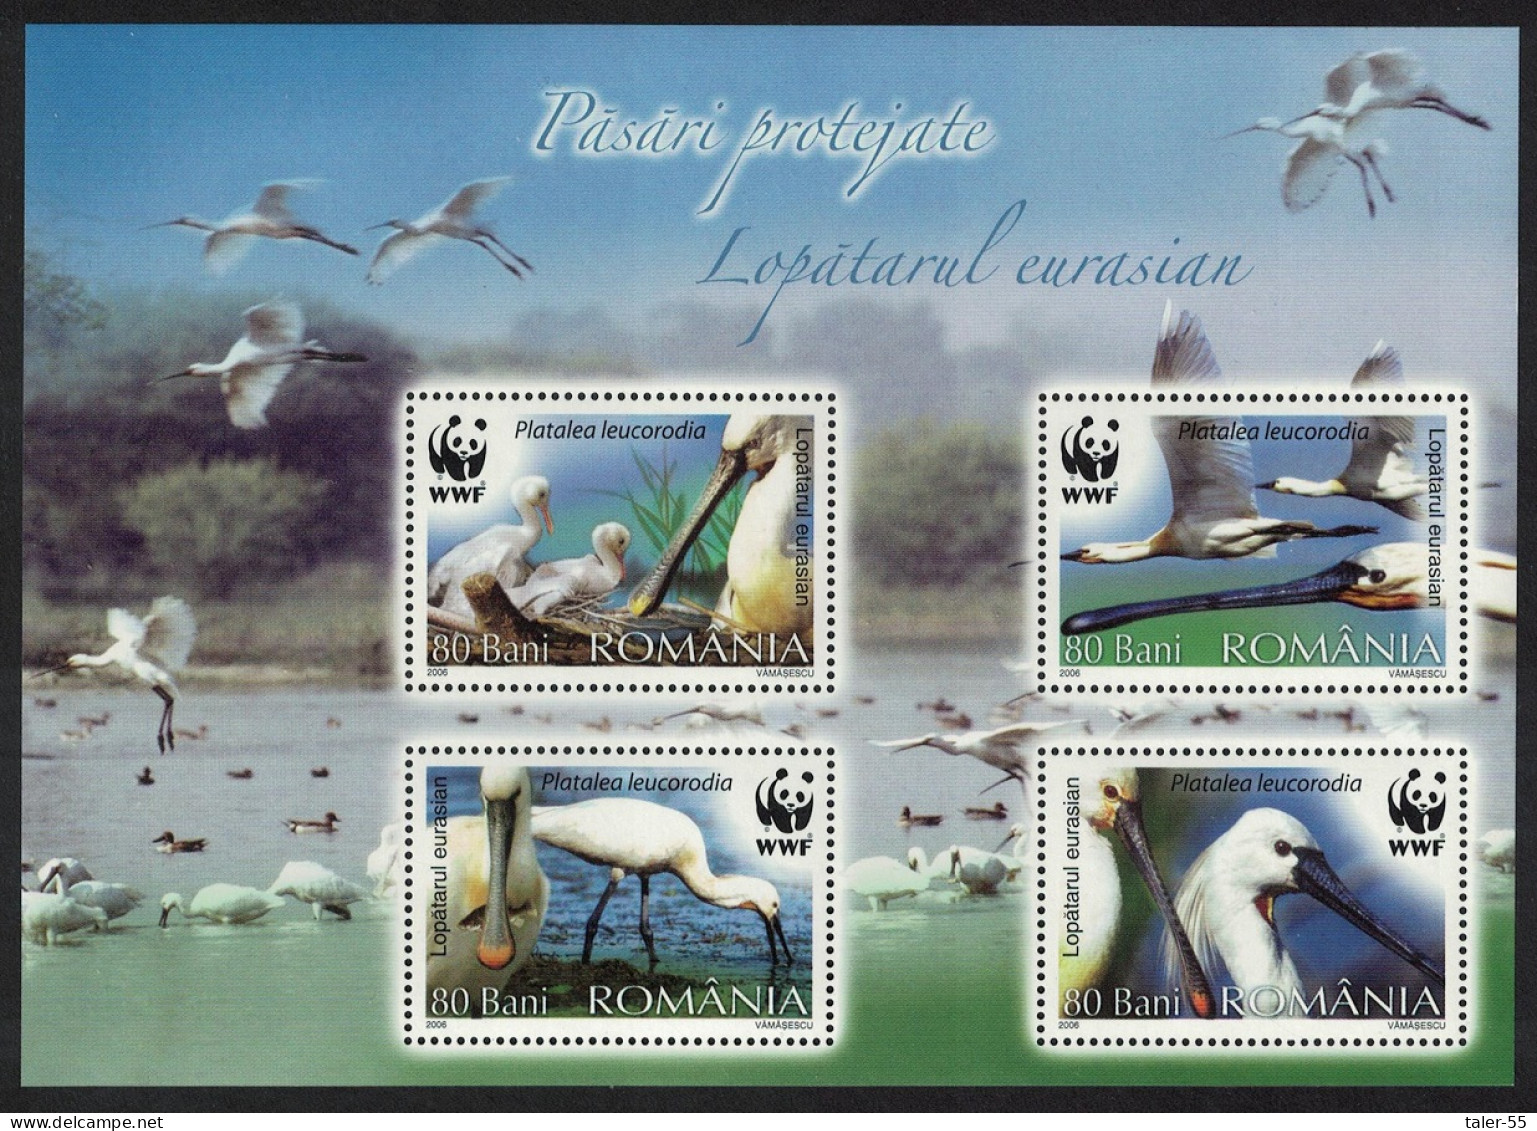 Romania WWF Eurasian Spoonbill Bird MS 2006 MNH SG#MS6735 MI#Block 391 - Unused Stamps